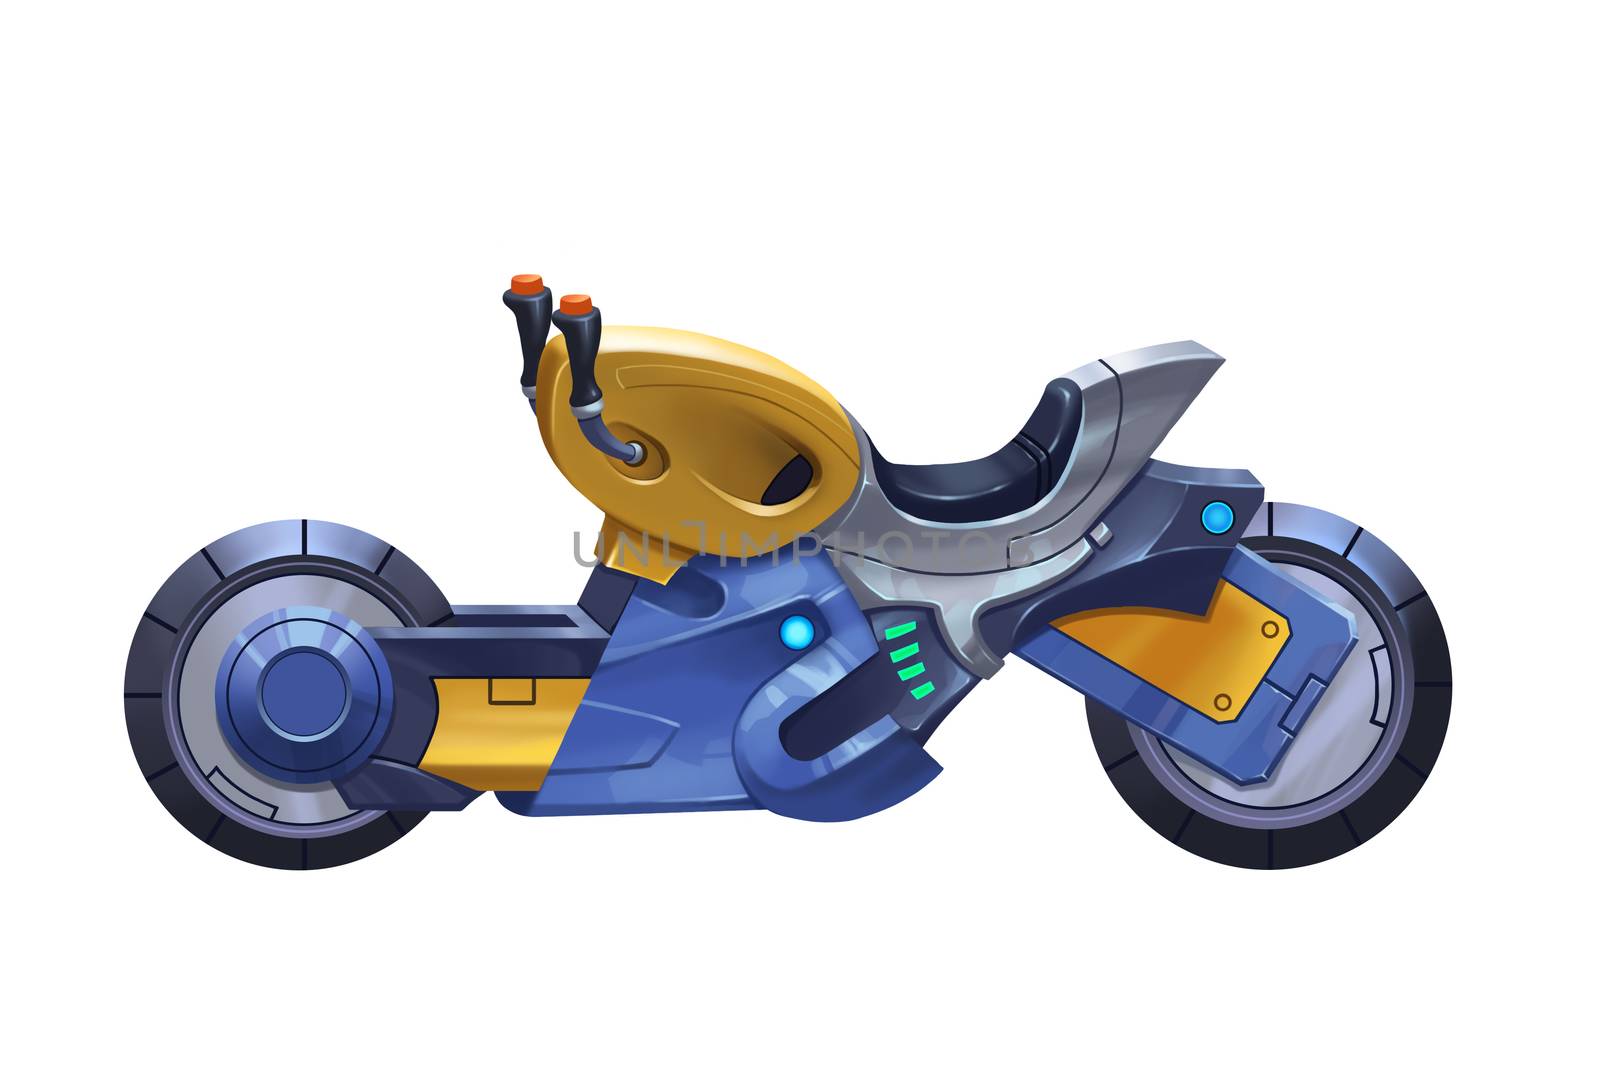 Illustration: The Fantastic Motorcycle - The Bounty Hunter's favorite vehicle. Element Creation. Cartoon / Sci-Fi Style by NextMars